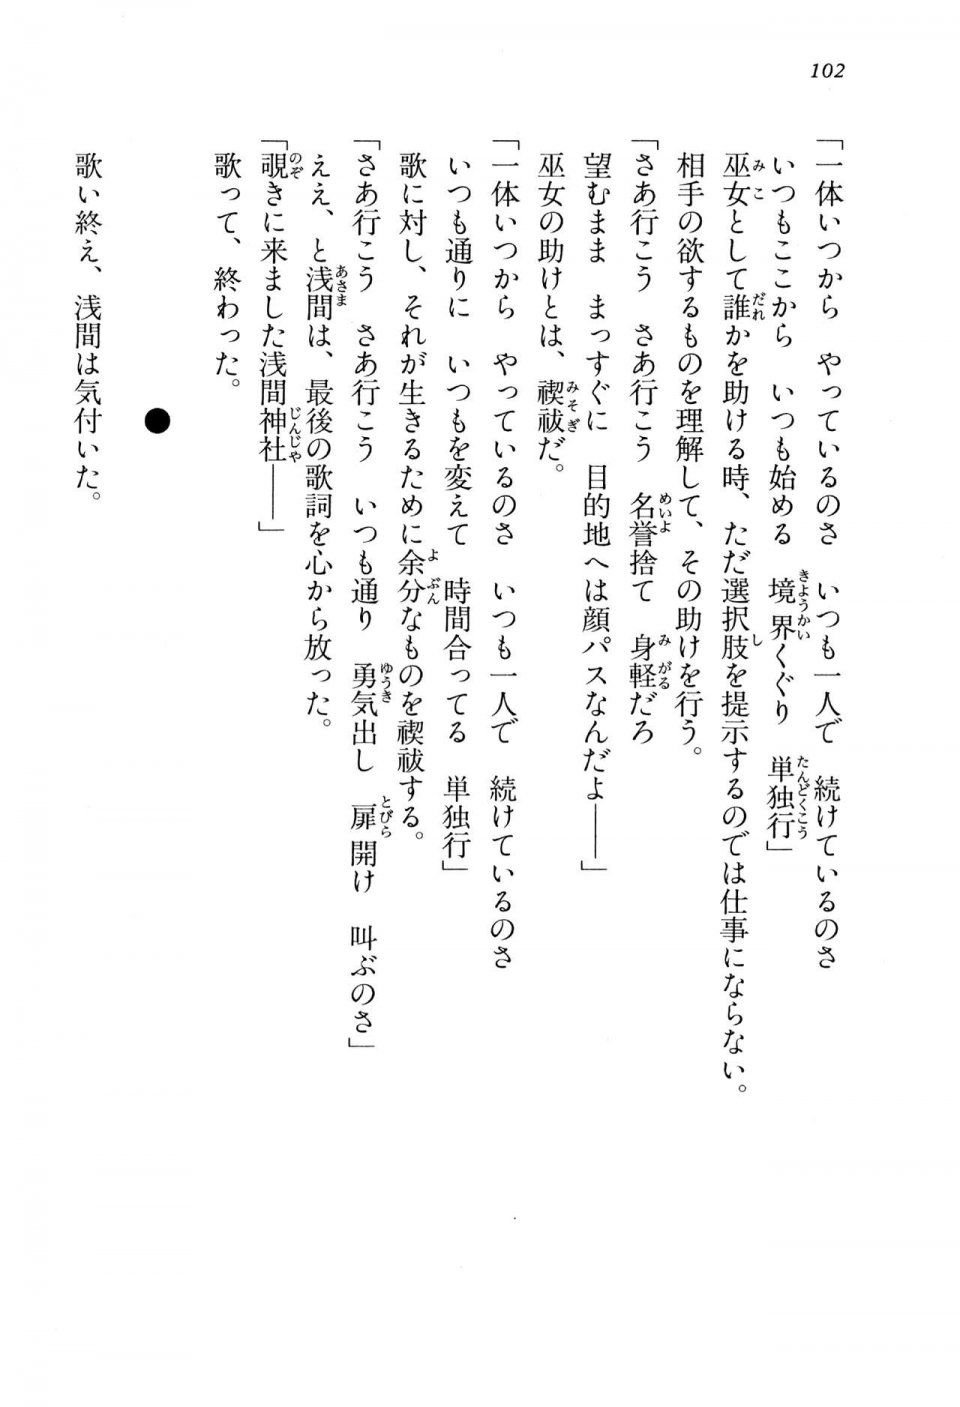 Kyoukai Senjou no Horizon BD Special Mininovel Vol 3(2A) - Photo #106